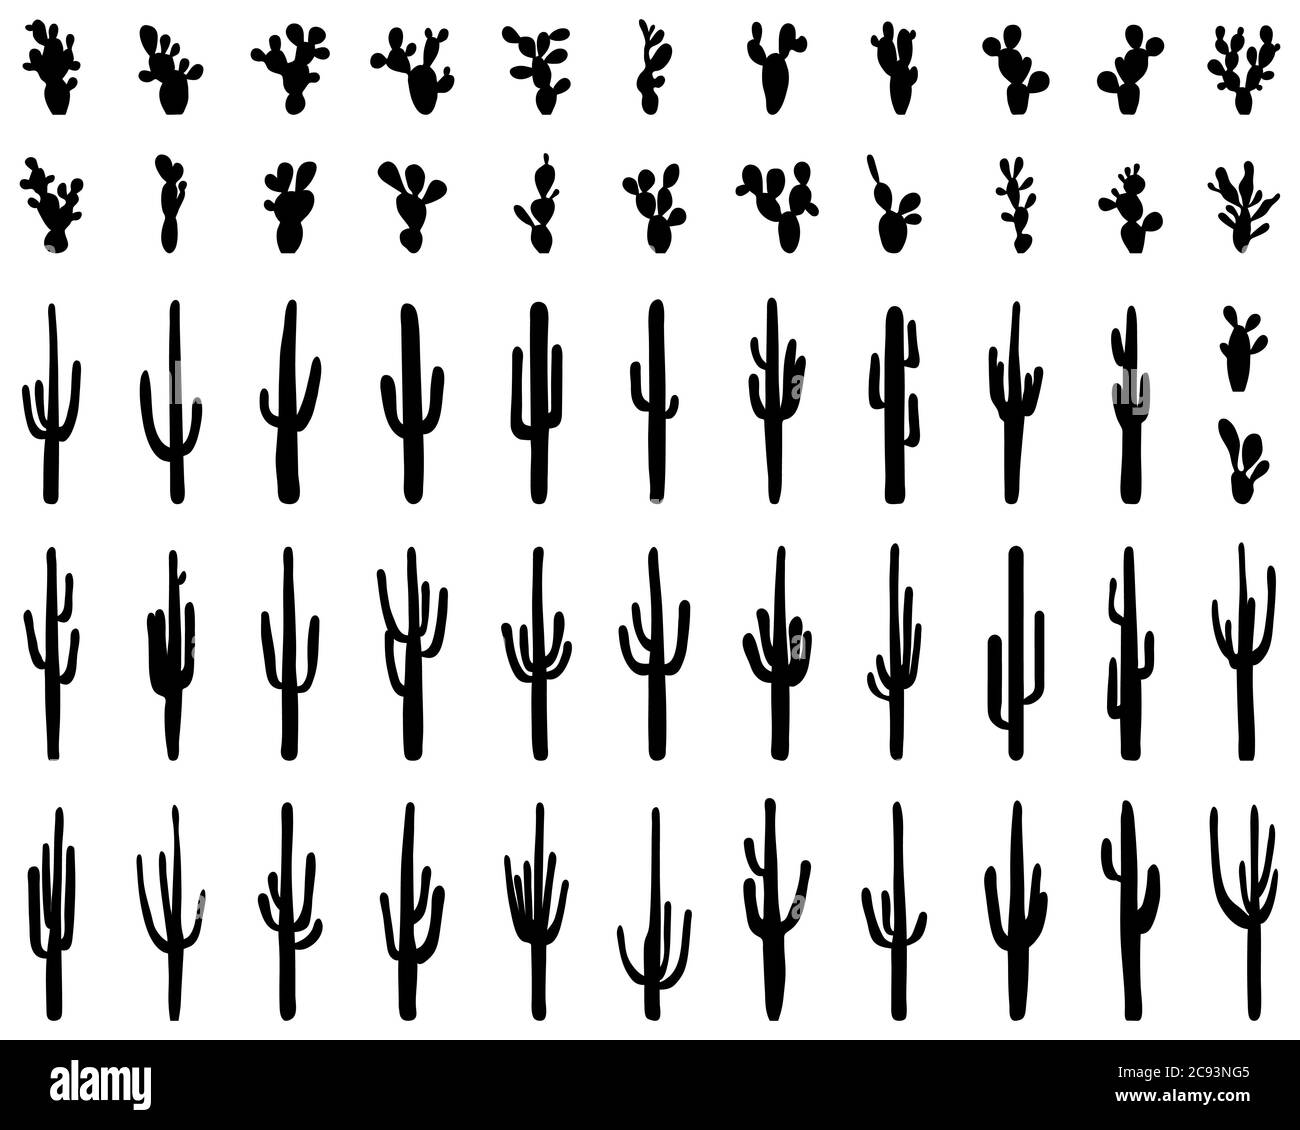 Siluetas de diferentes cactus negro sobre un fondo blanco. Foto de stock